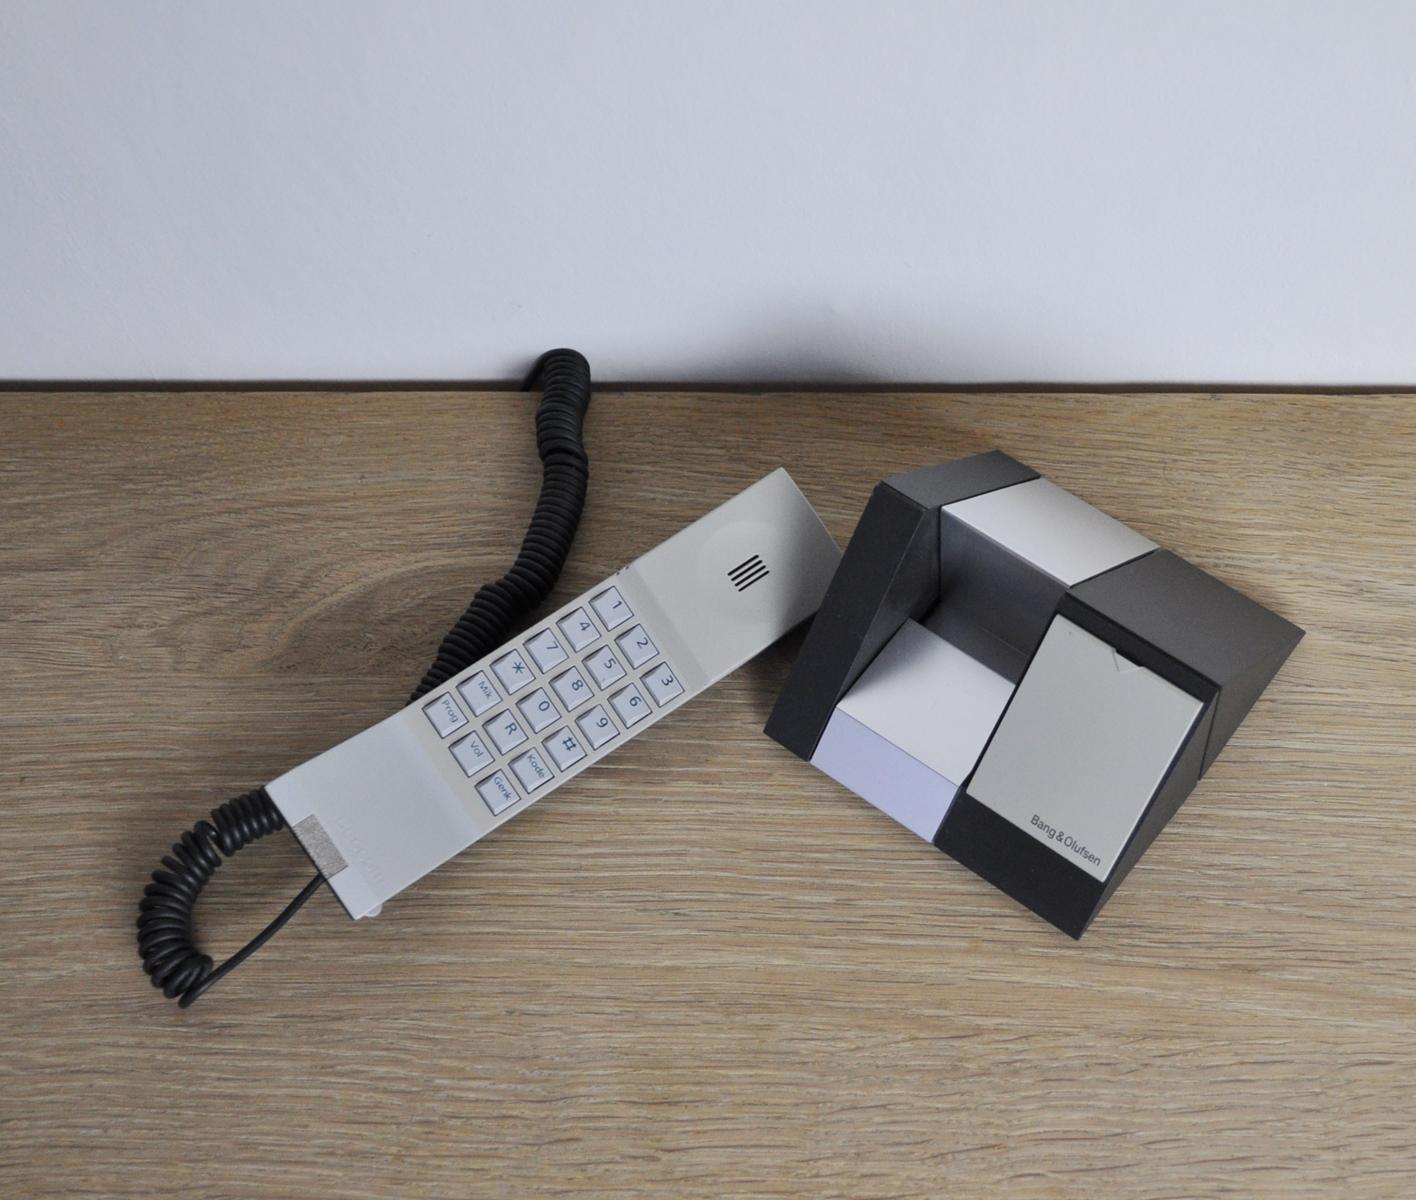 Scandinavian Modern Beocom 1401 Telephone from 1990s by Bang & Olusfen